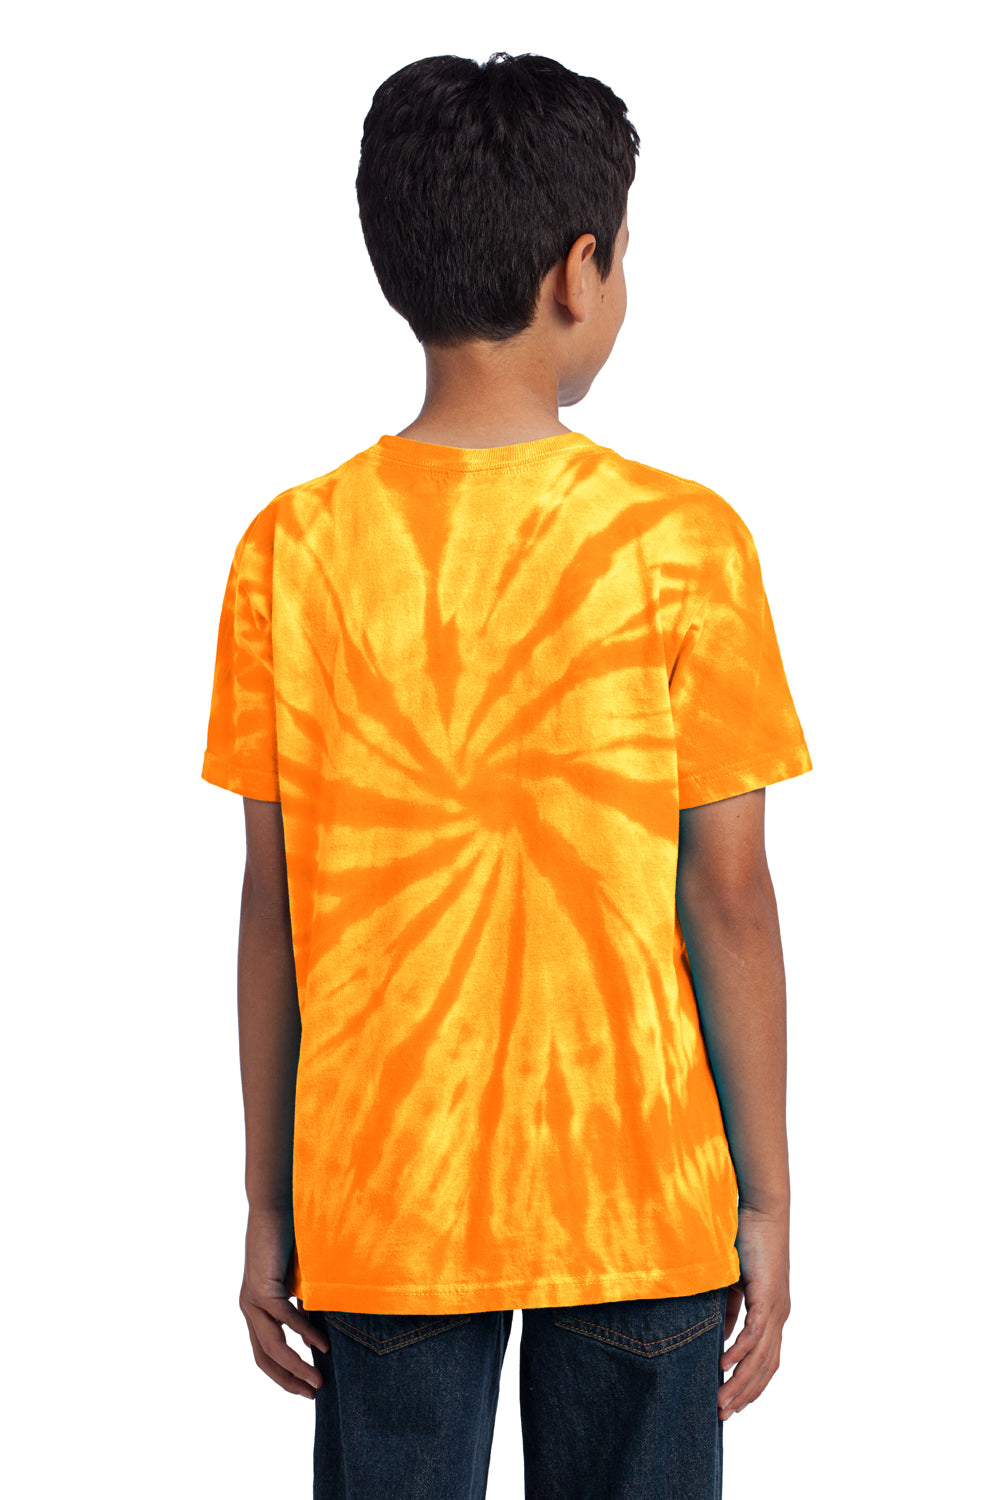 Port & Company PC147Y Youth Tie-Dye Short Sleeve Crewneck T-Shirt Gold Back